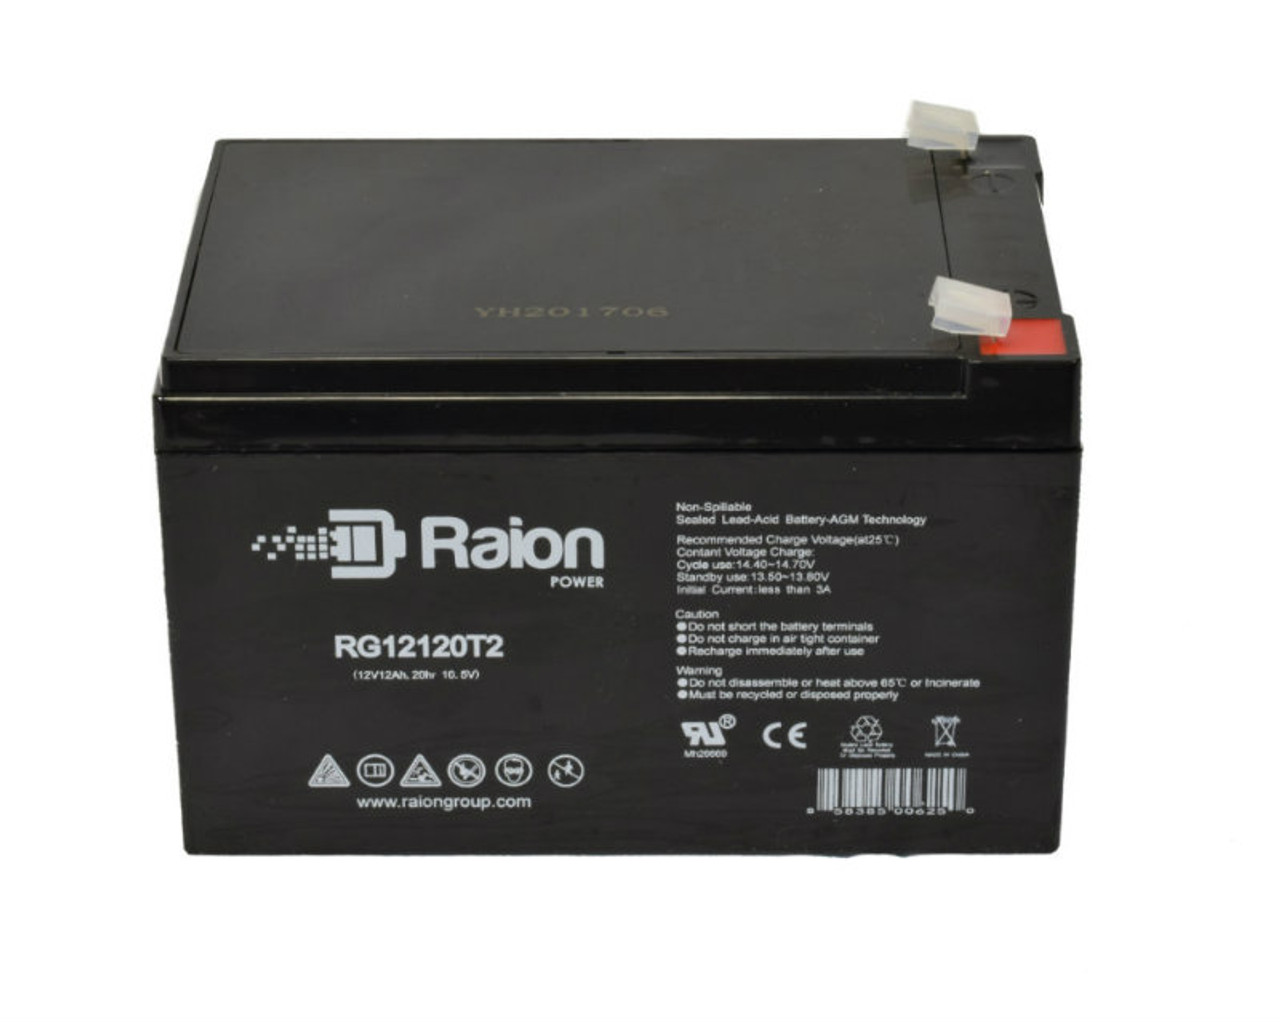 Raion Power RG12120T2 SLA Battery for Bladez Mobility eLite 300S Wheelchairs